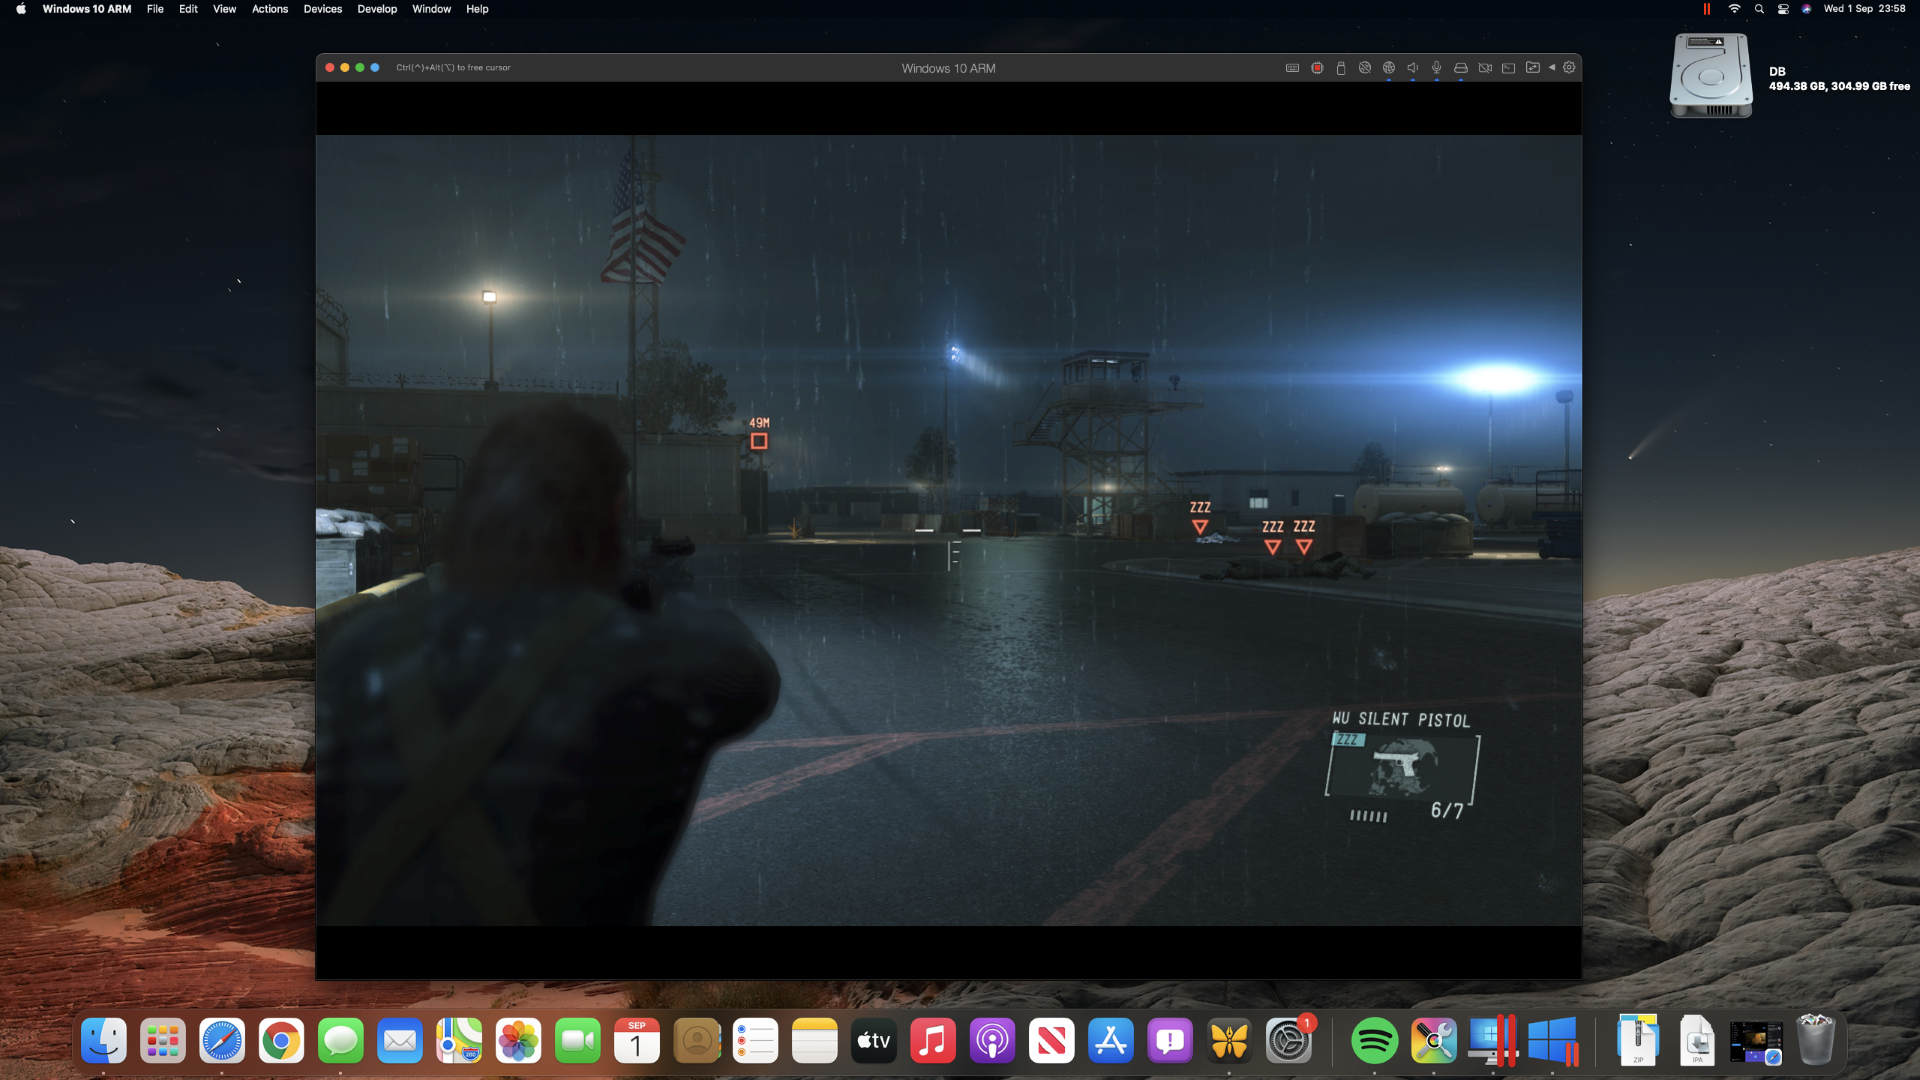 Metal Gear Solid V: Ground Zeroes on an M1 Mac mini through Steam